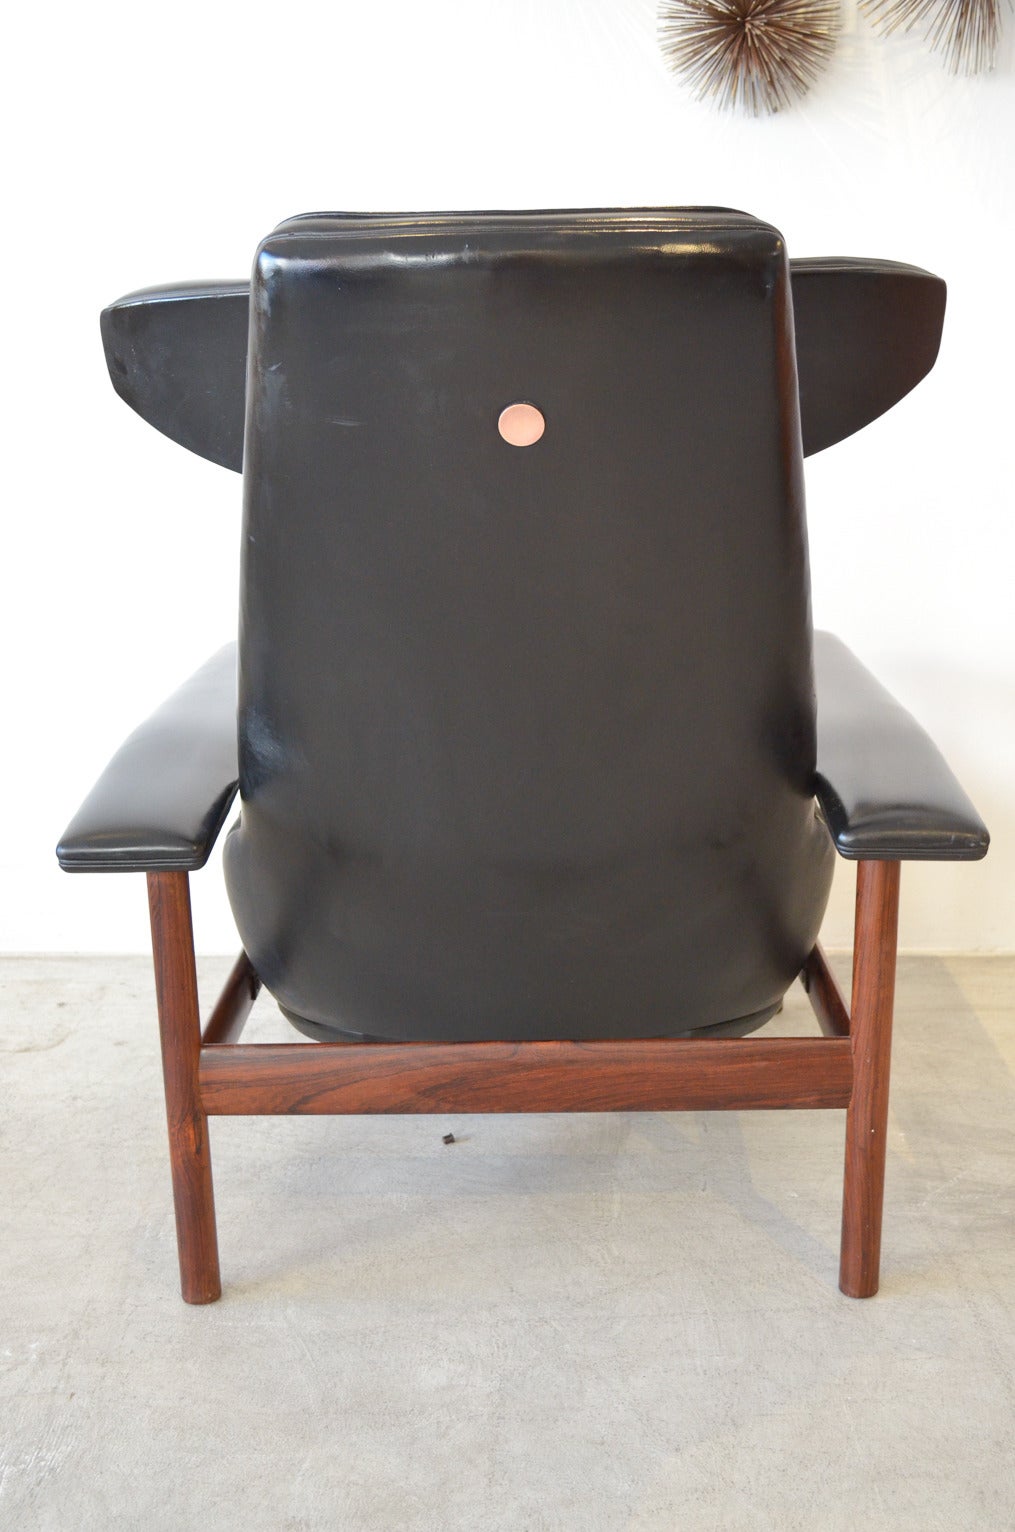 Naugahyde Rare Rosewood Lounge Chair and Ottoman by Sven Ivar Dysthe